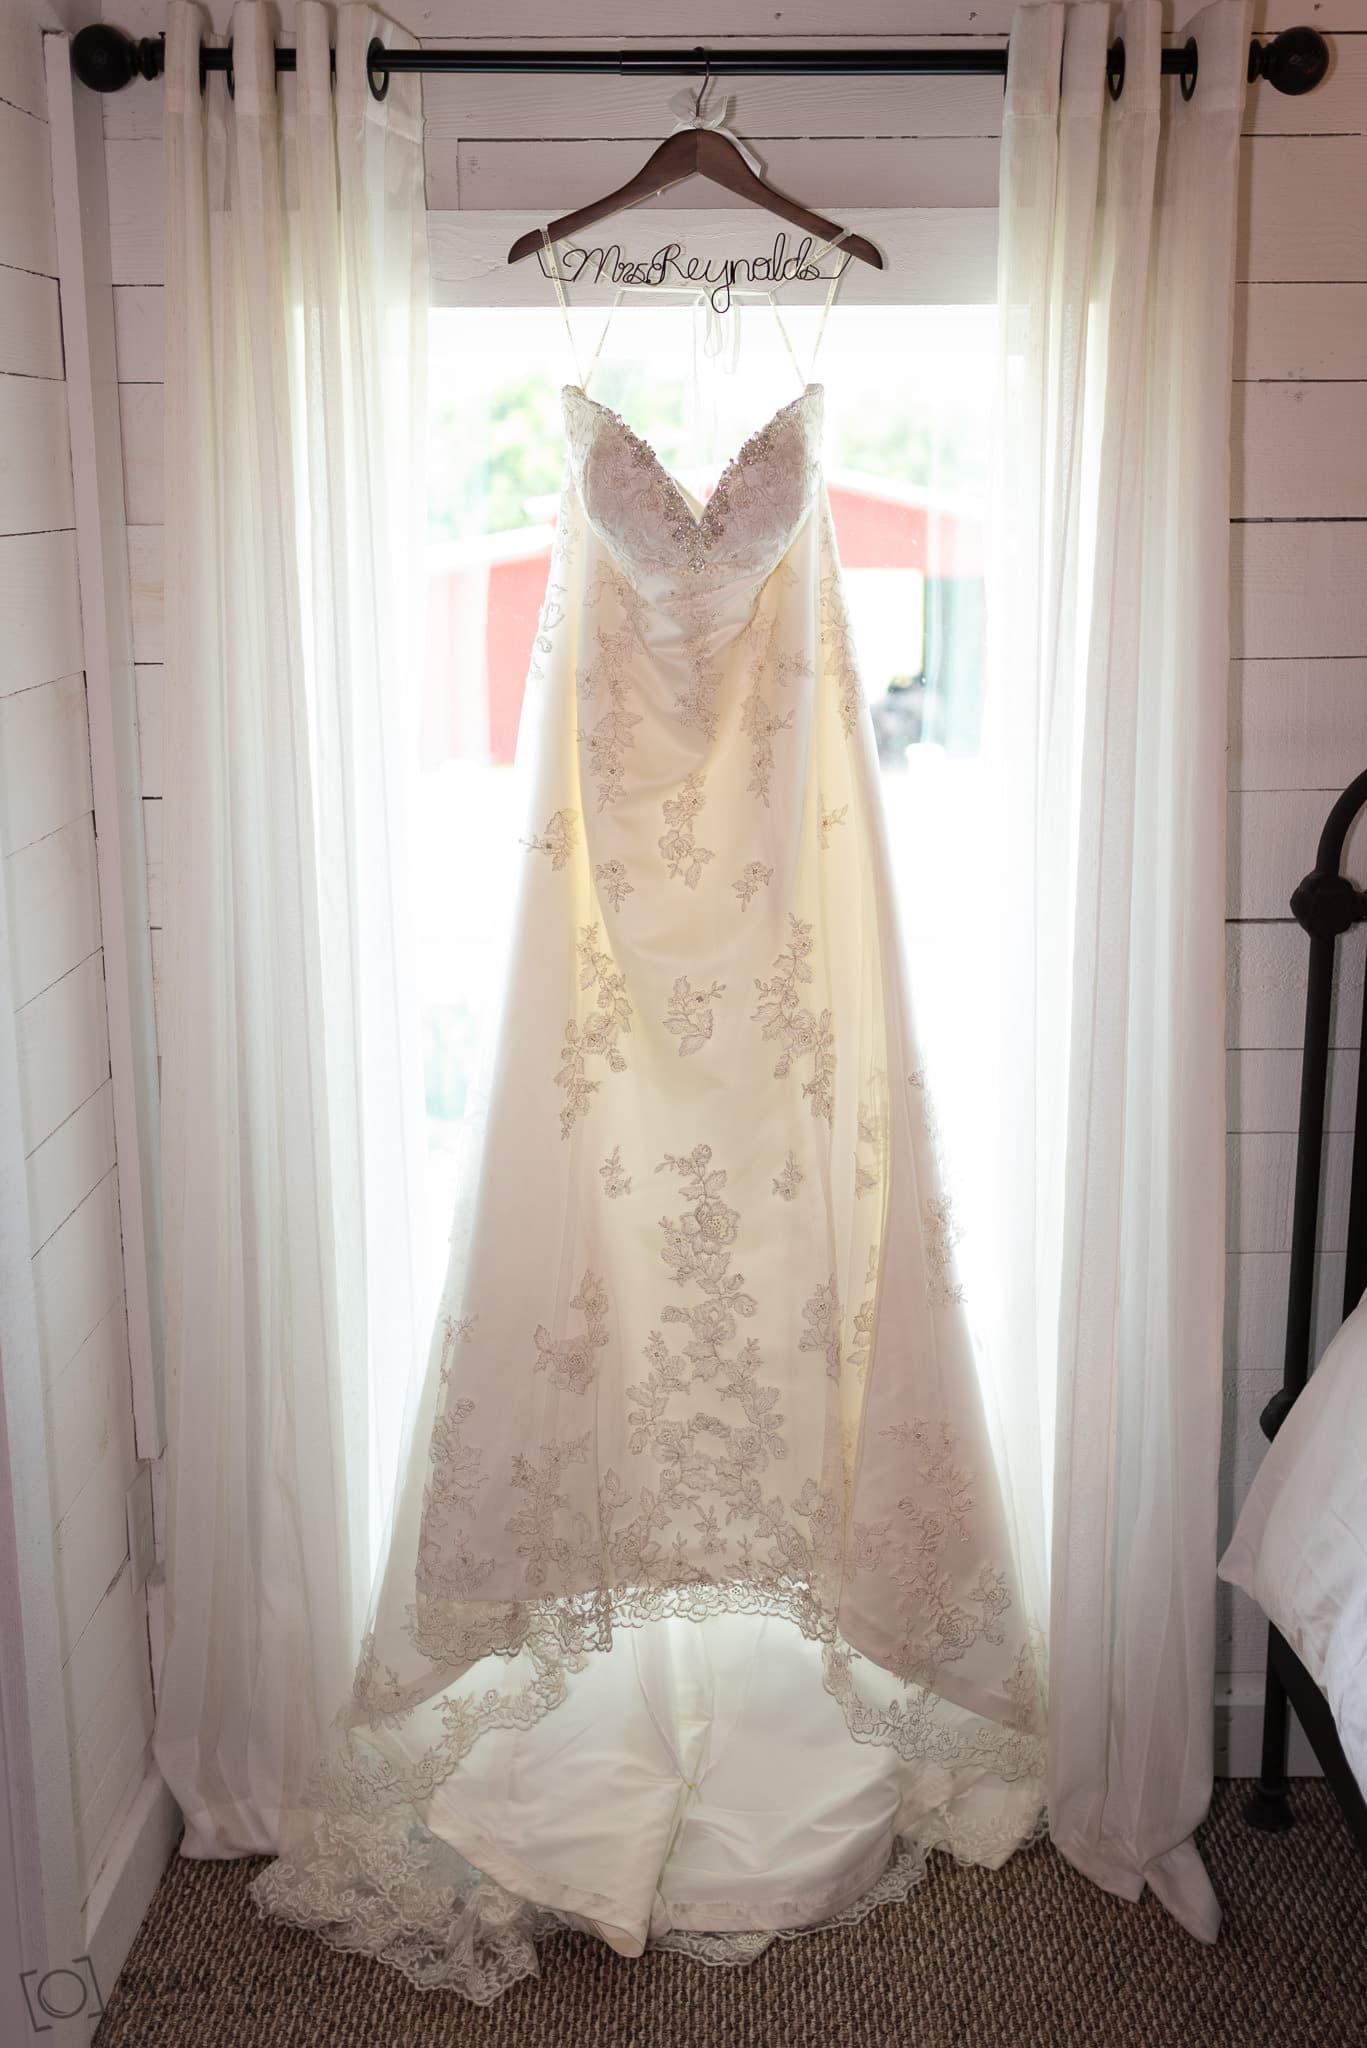 Bride's dress hanging in the window Wildberry Farm